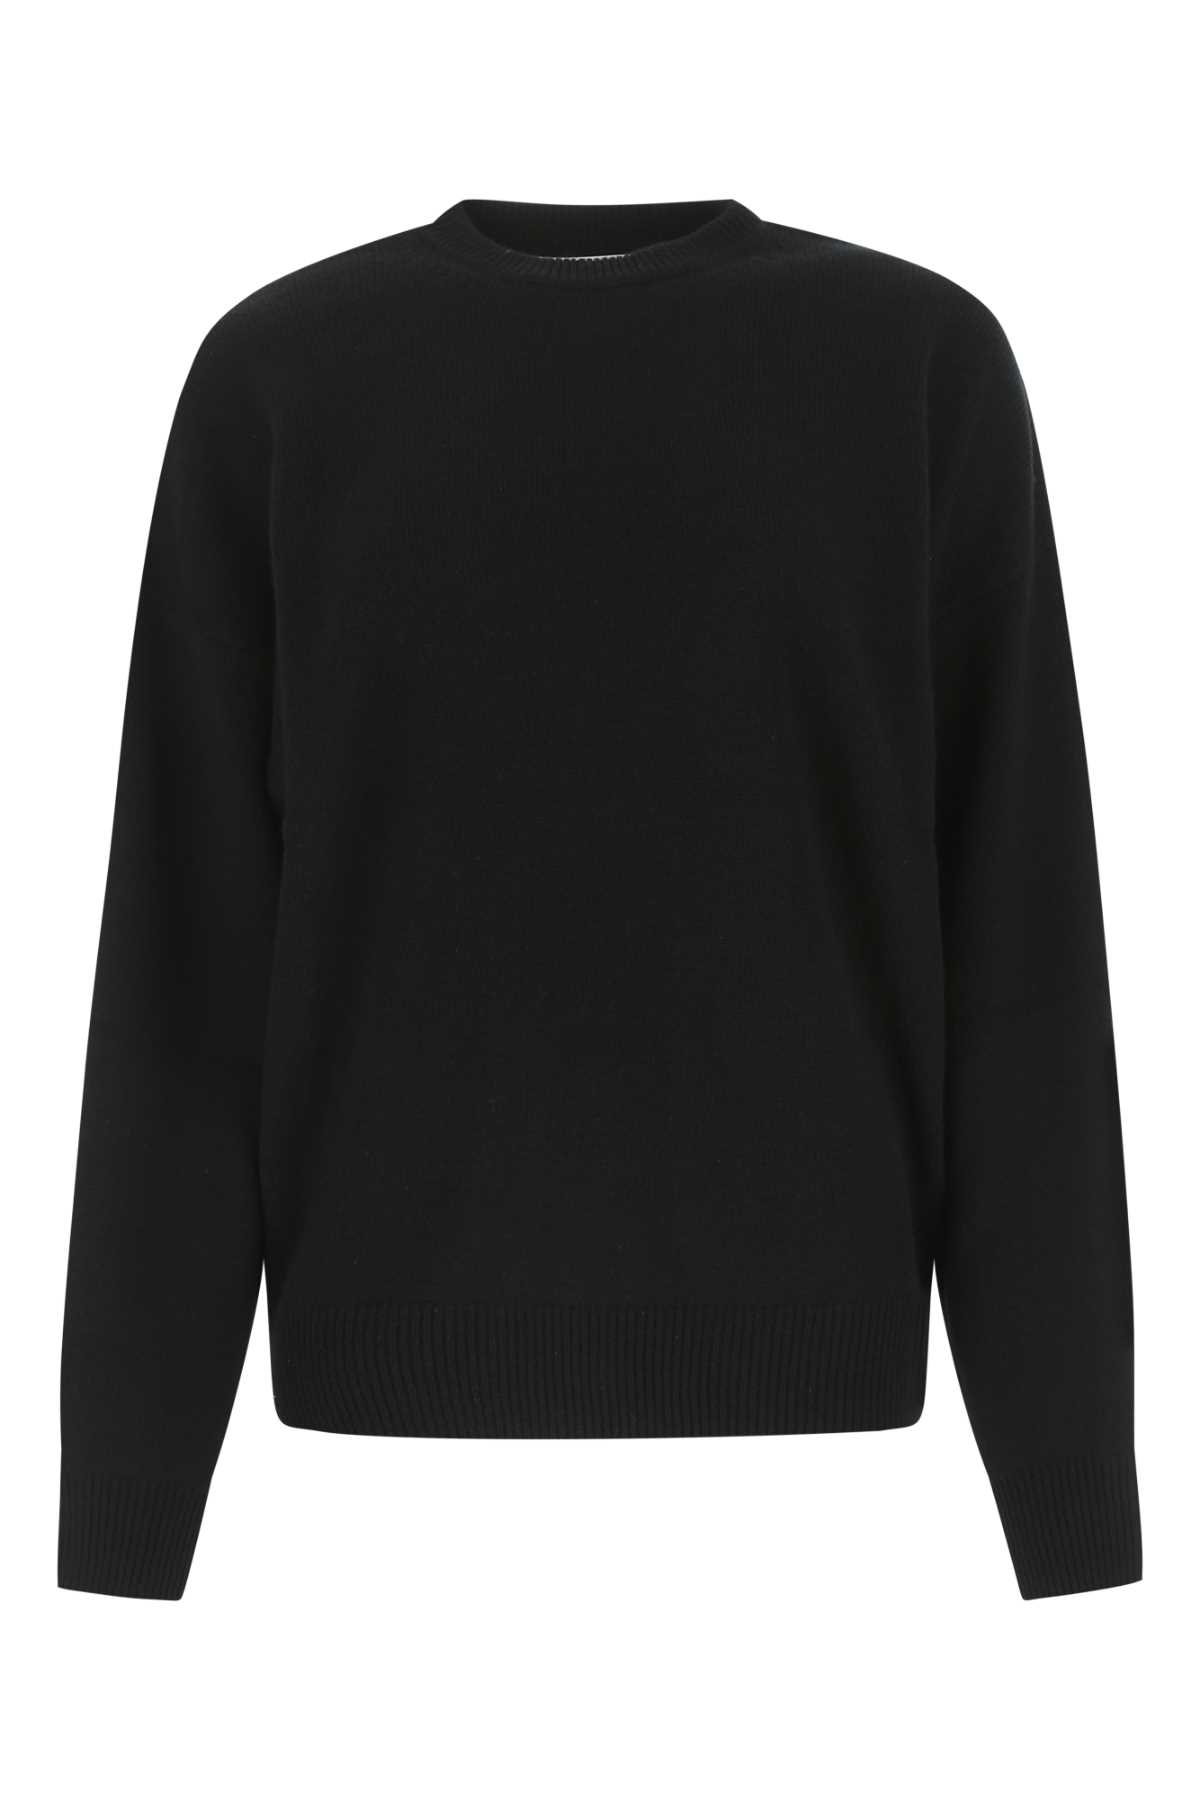 Balenciaga Black Cashmere Oversize Sweater